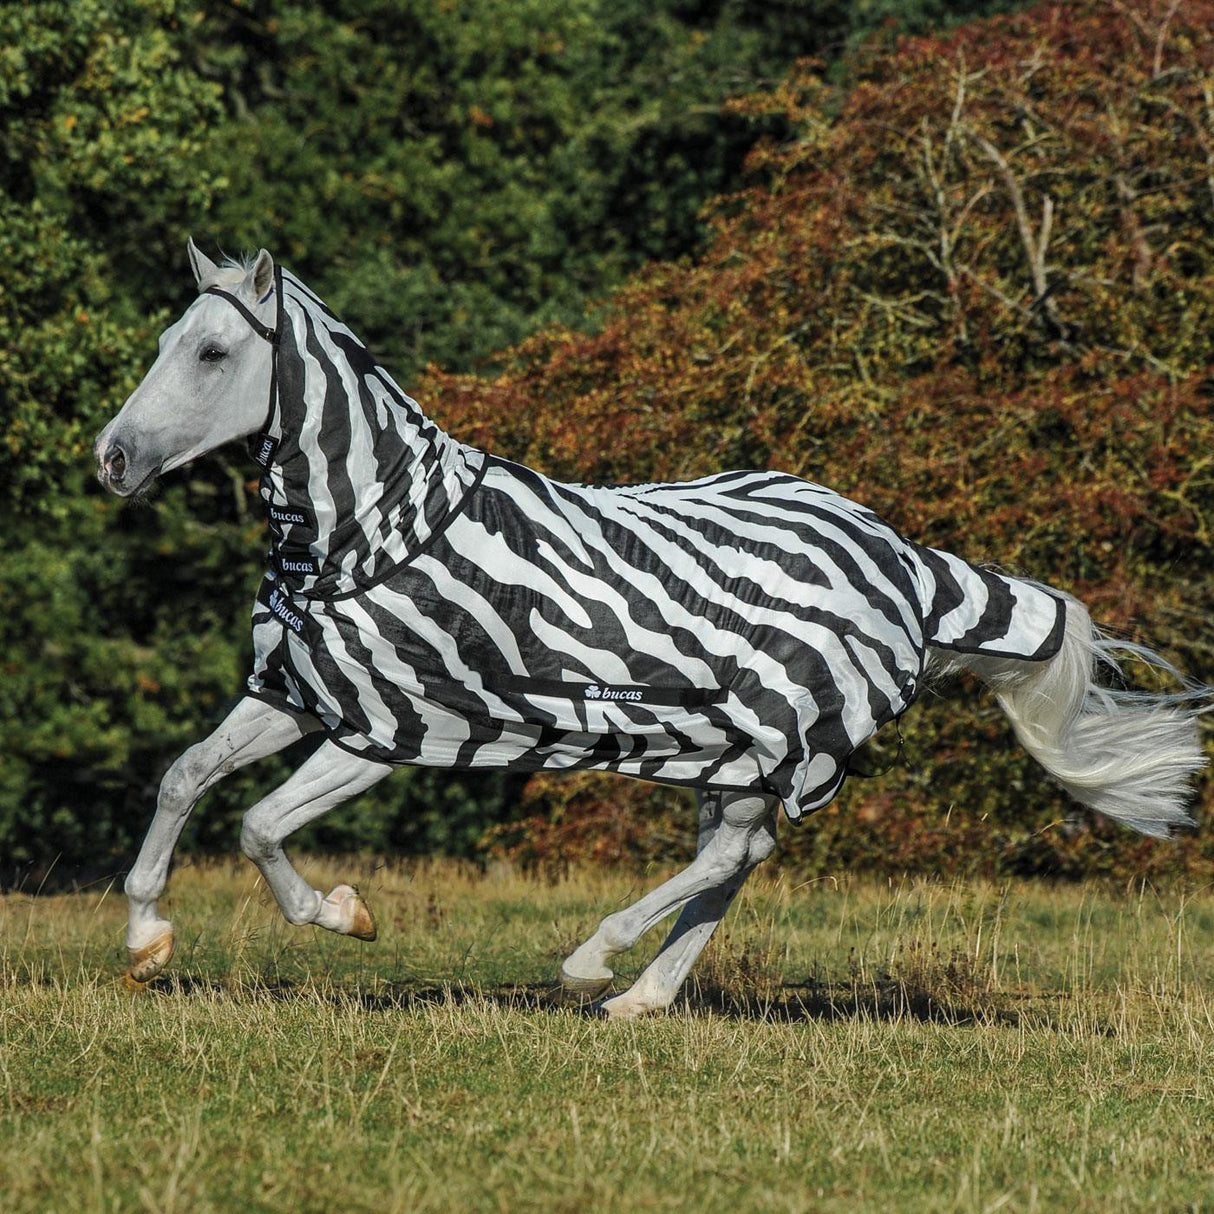 Bucas Buzz Off Zebra Full Neck Fly Sheet - Pony